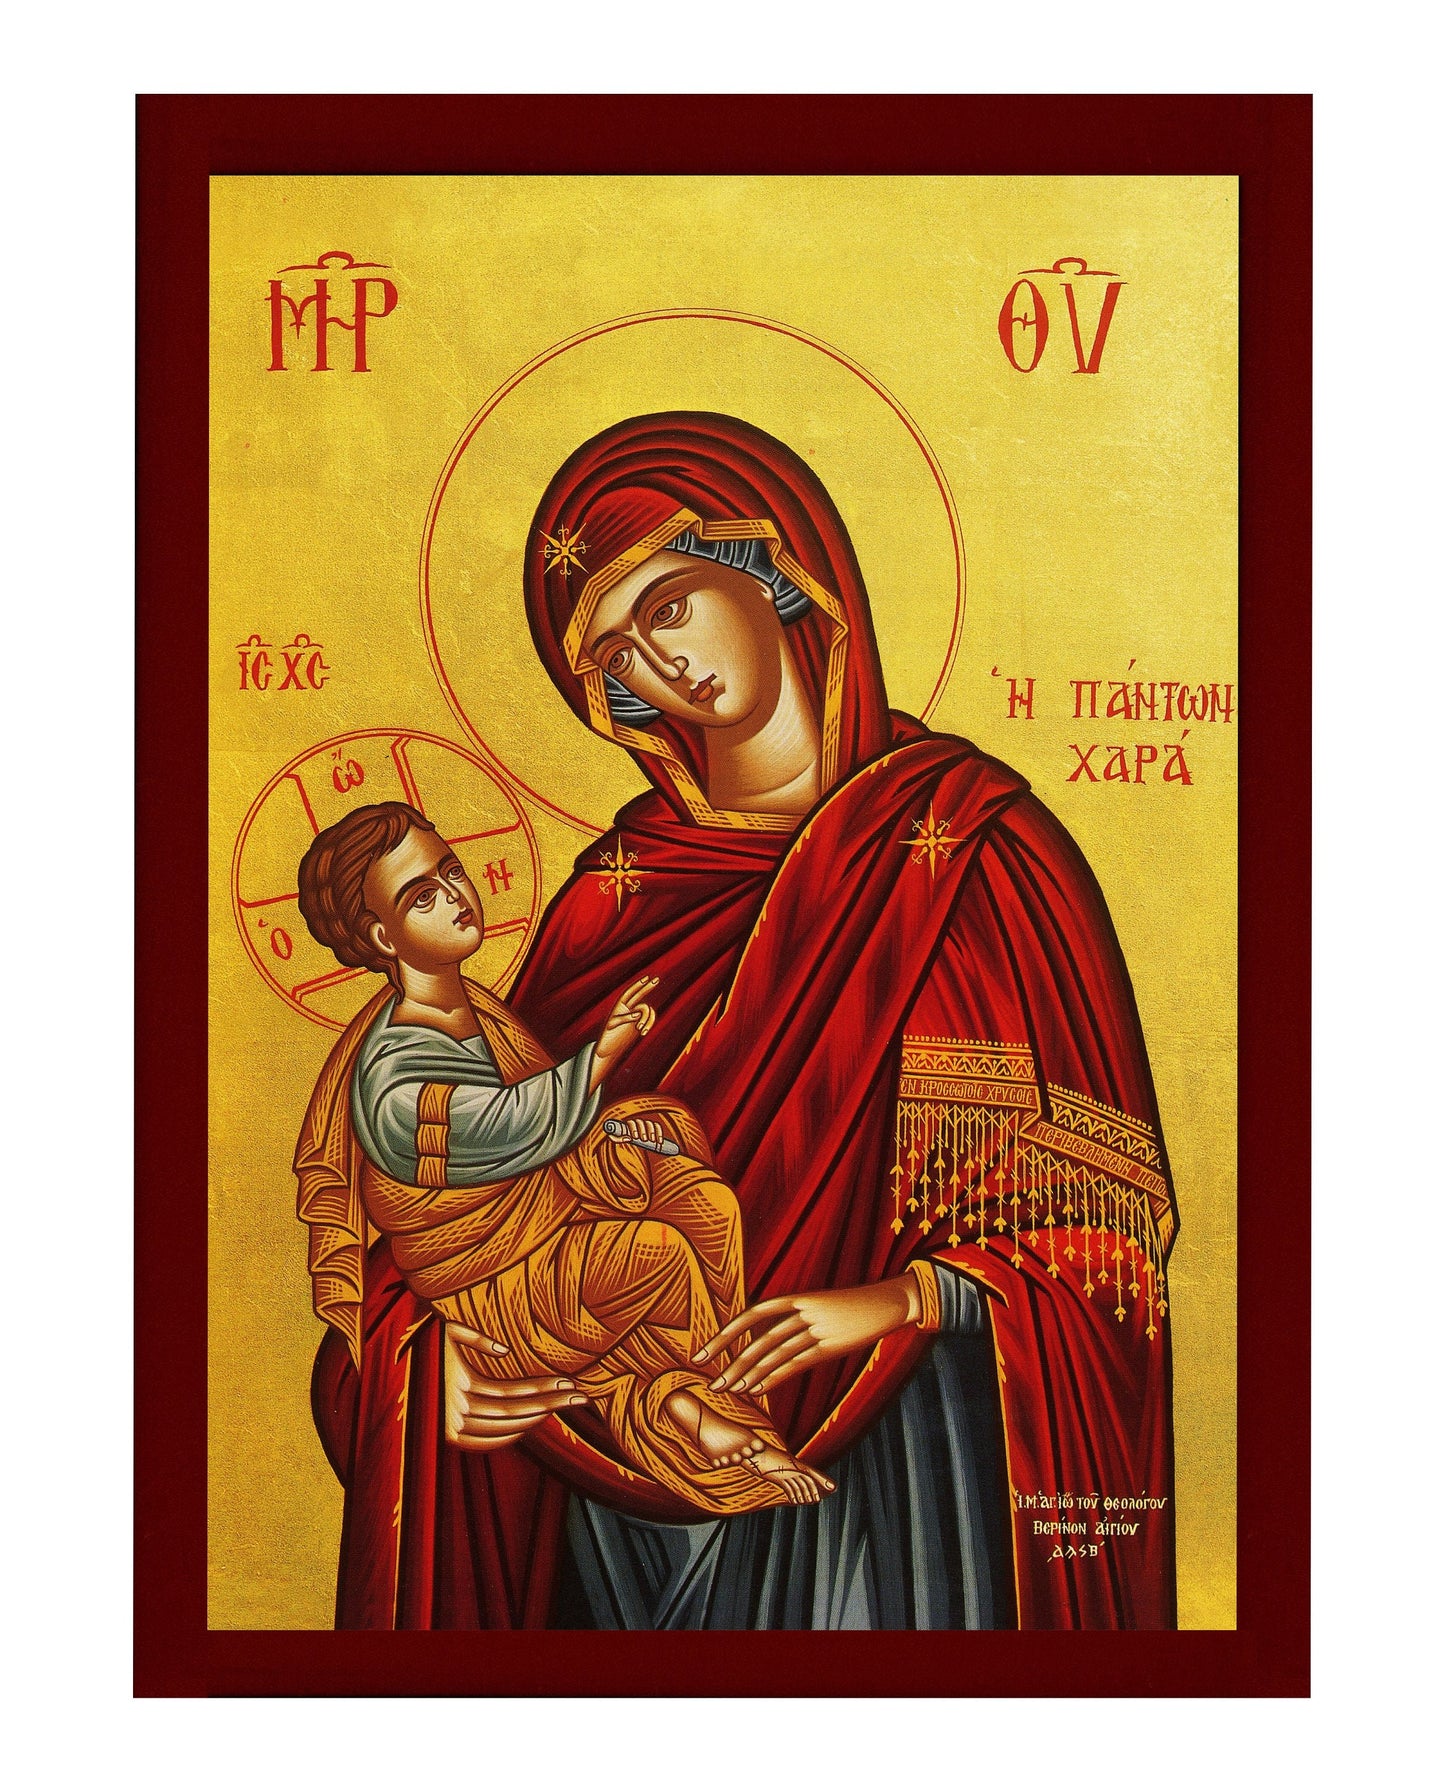 Virgin Mary icon Panagia Panton Chara, Handmade Greek Orthodox Icon, Mother of God Byzantine art, Theotokos wall hanging wood plaque icon TheHolyArt